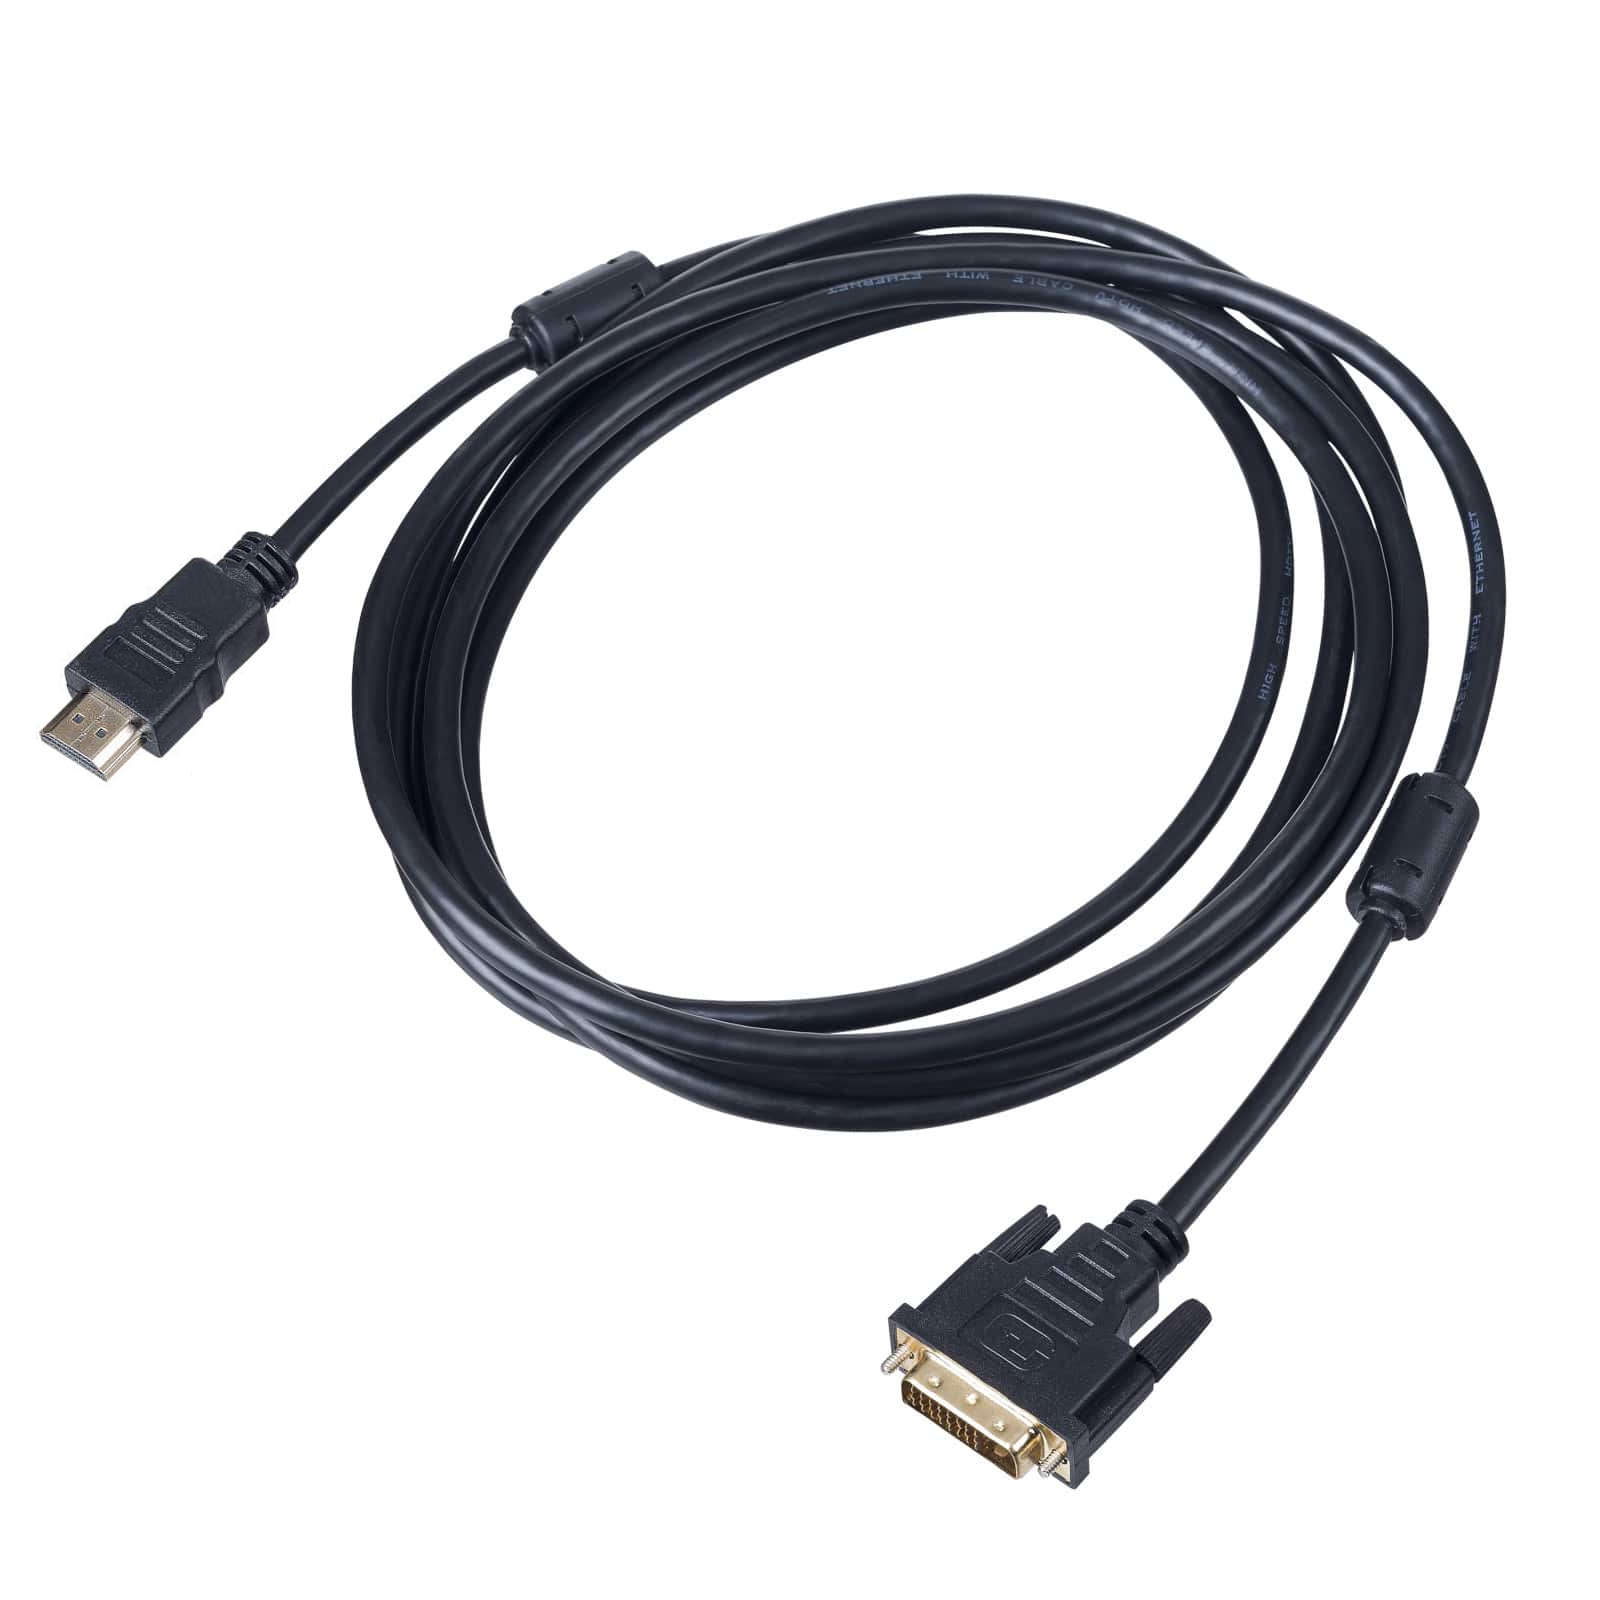  Cavo HDMI / DVI 24+1 AK-AV-13 3.0m